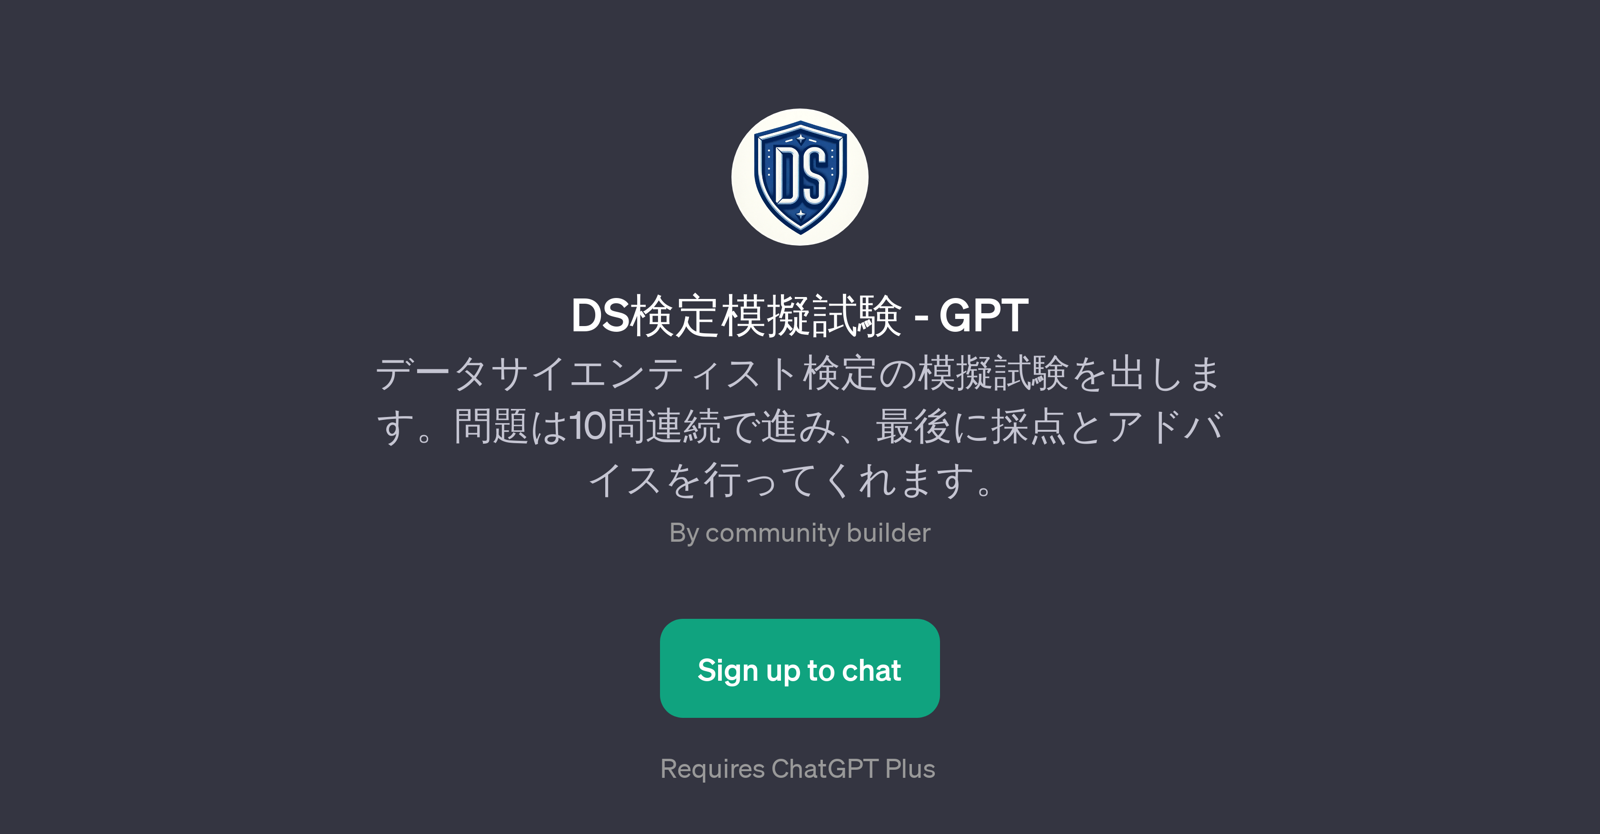 DS - GPT website